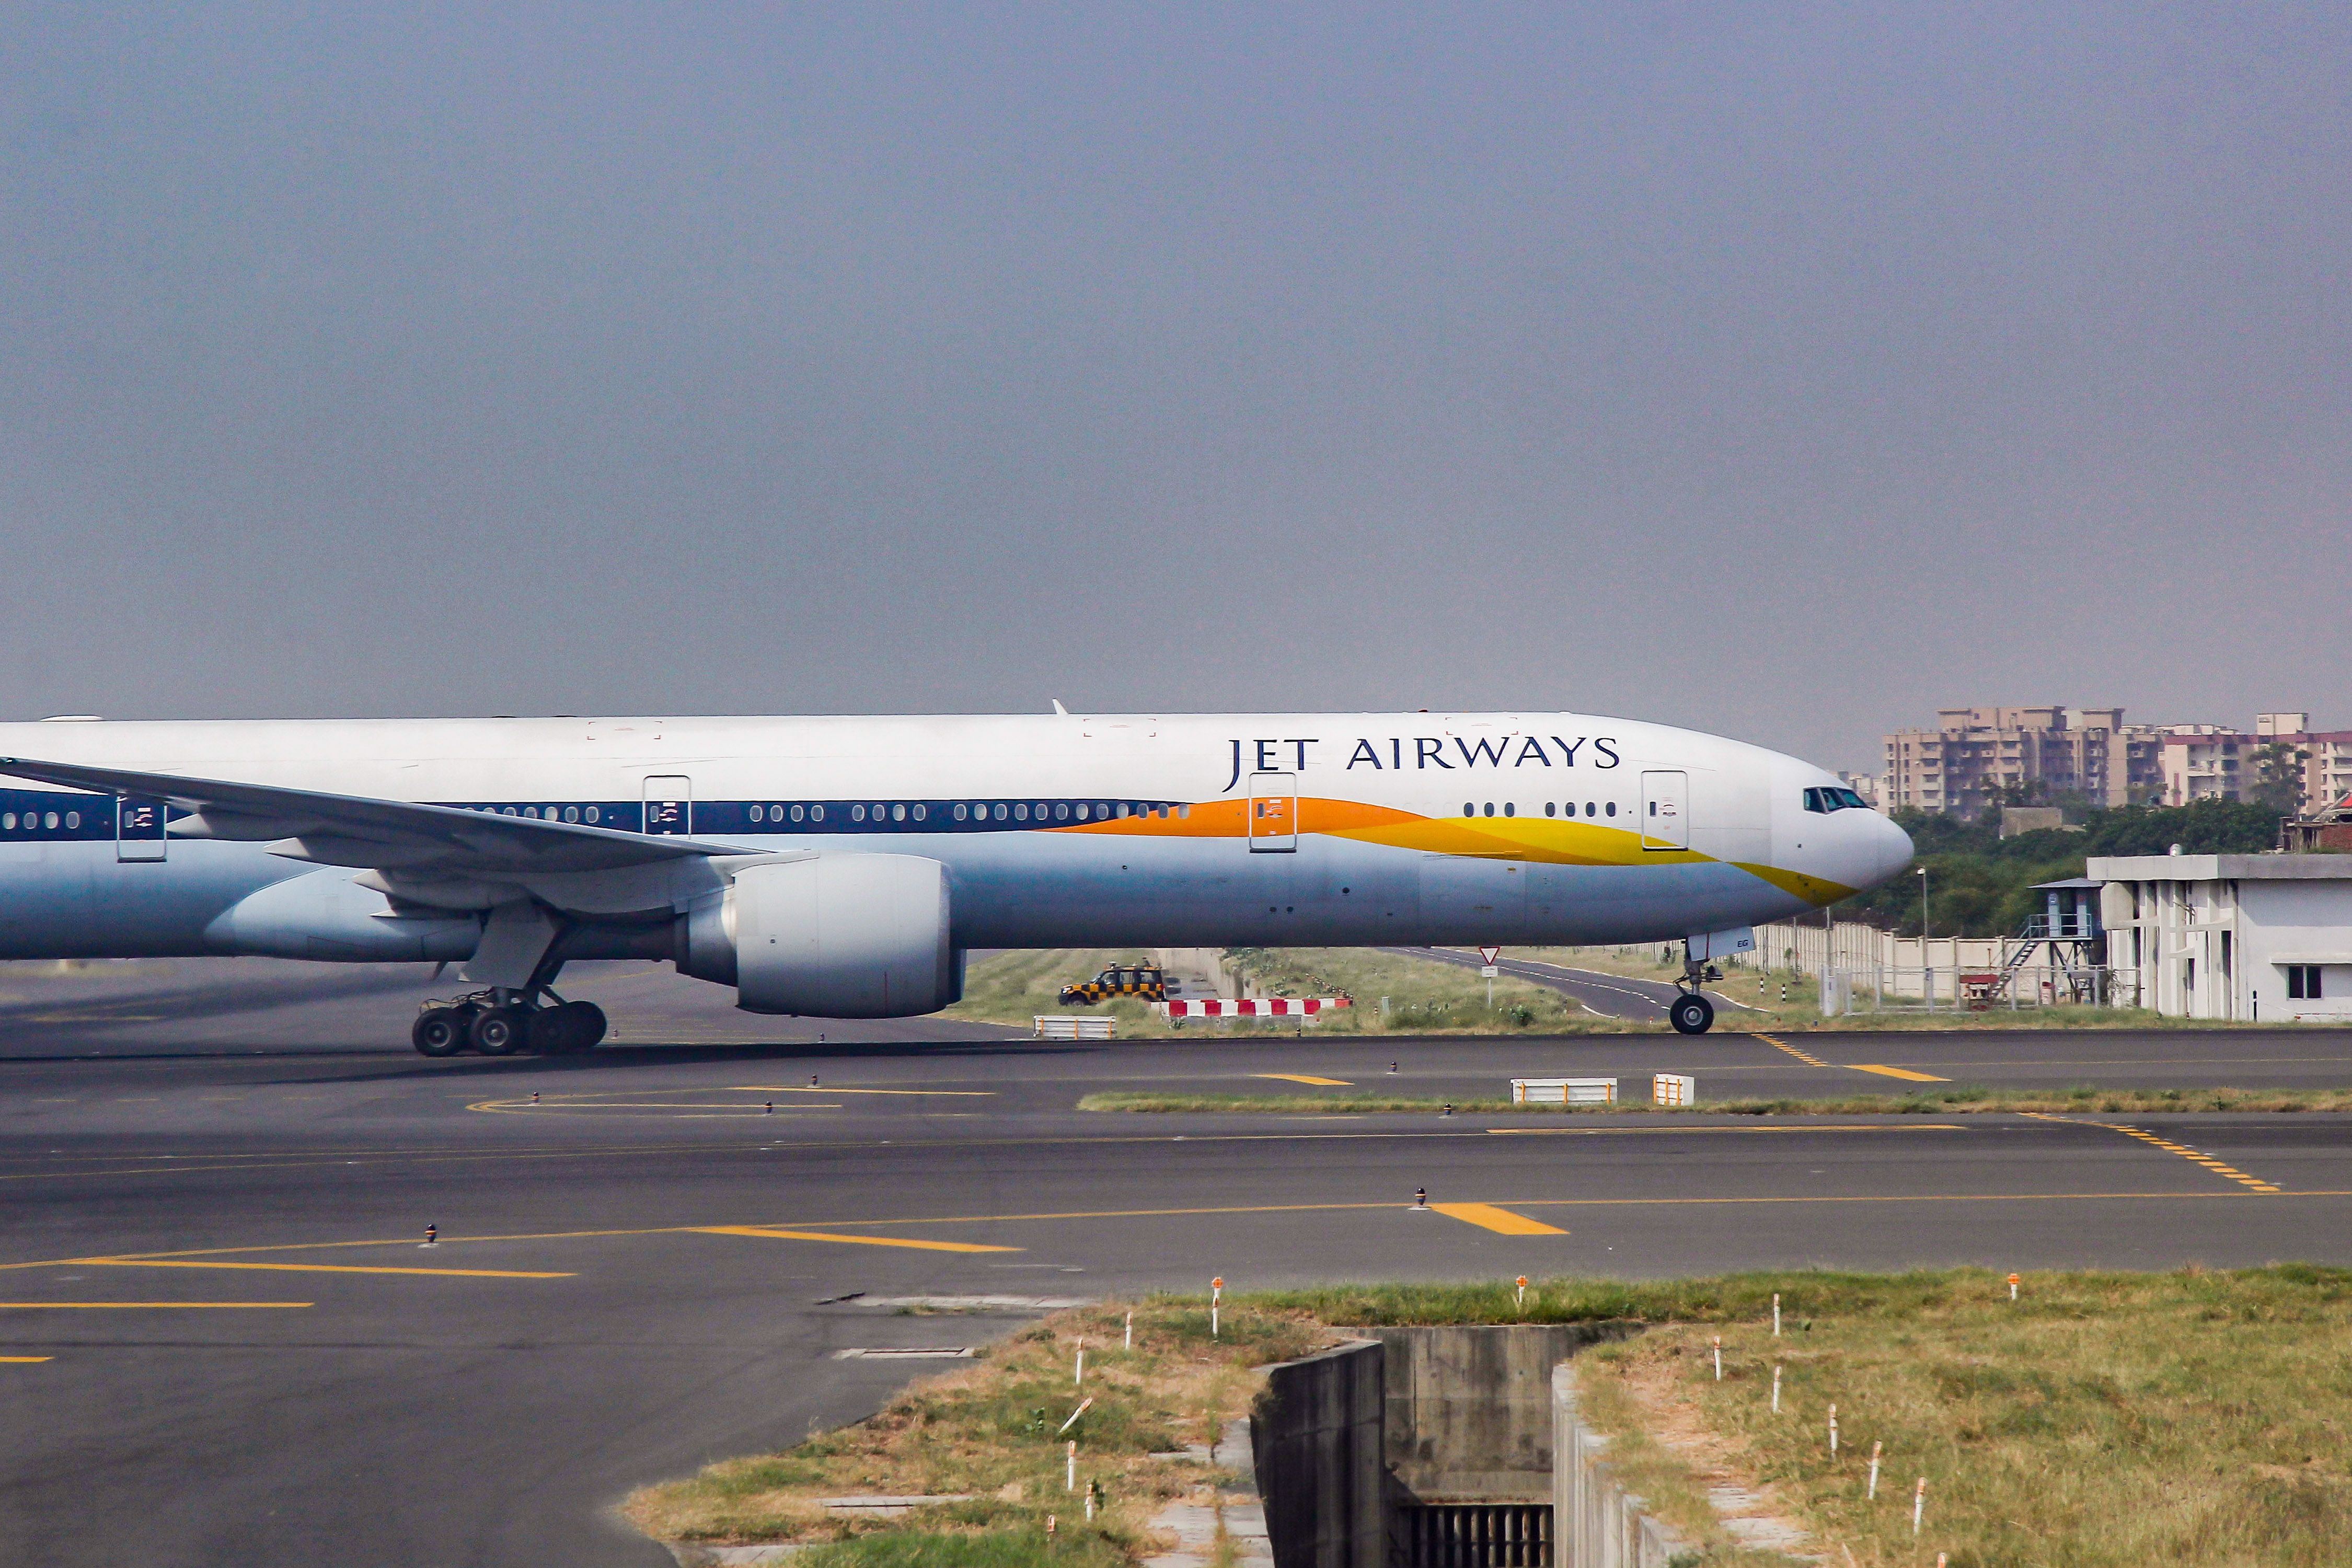 Jet Airways Boeing 777-300 airplane taxiing at Delhi's Indira Gandhi International Airport